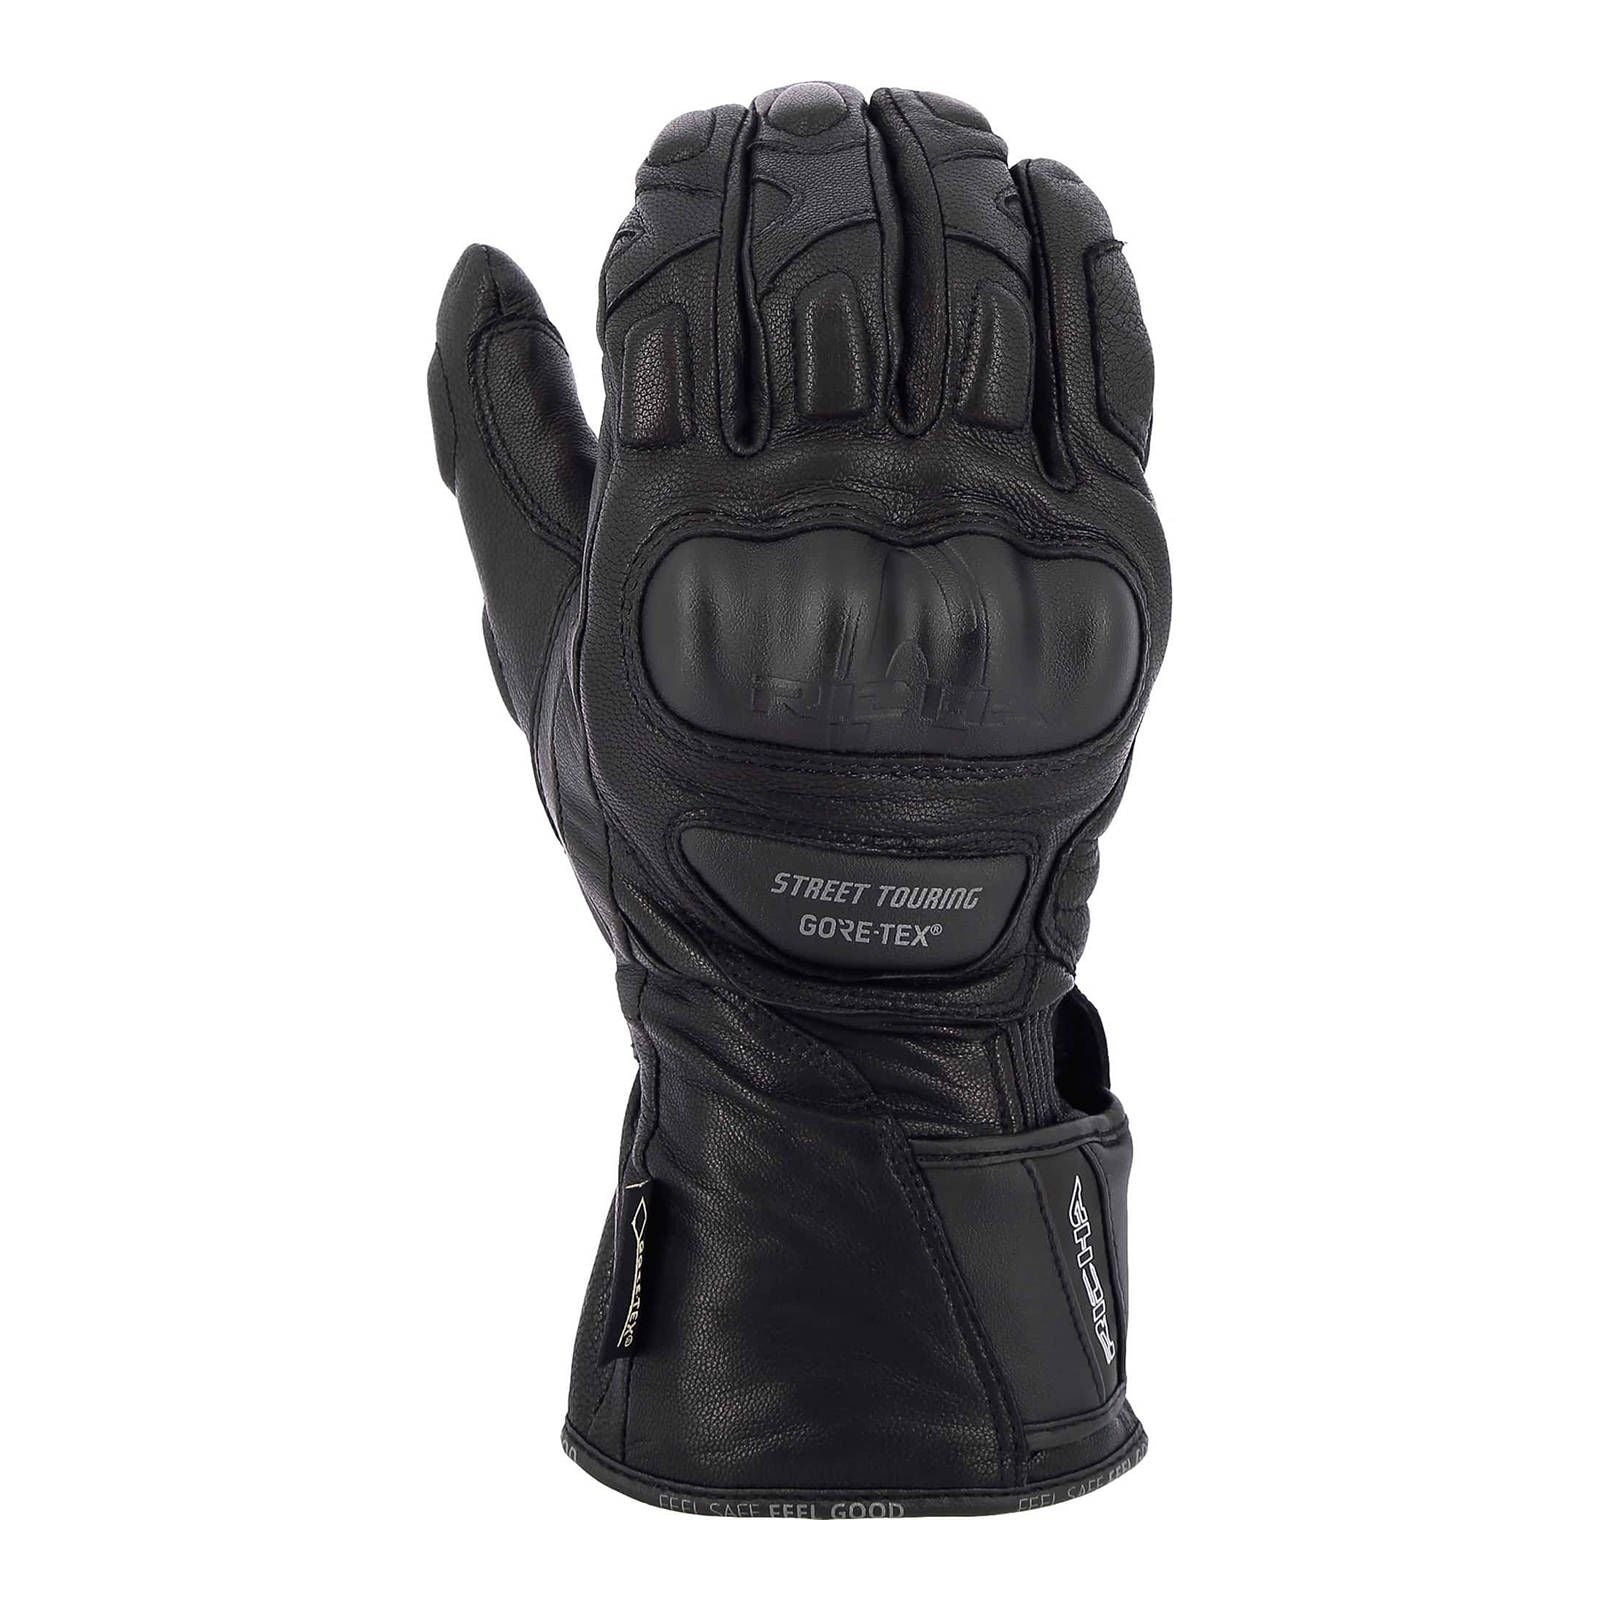 New RICHA Street Touring Leaher Gore-Tex Glove - Black (2XL) #RAGSTGB2XL